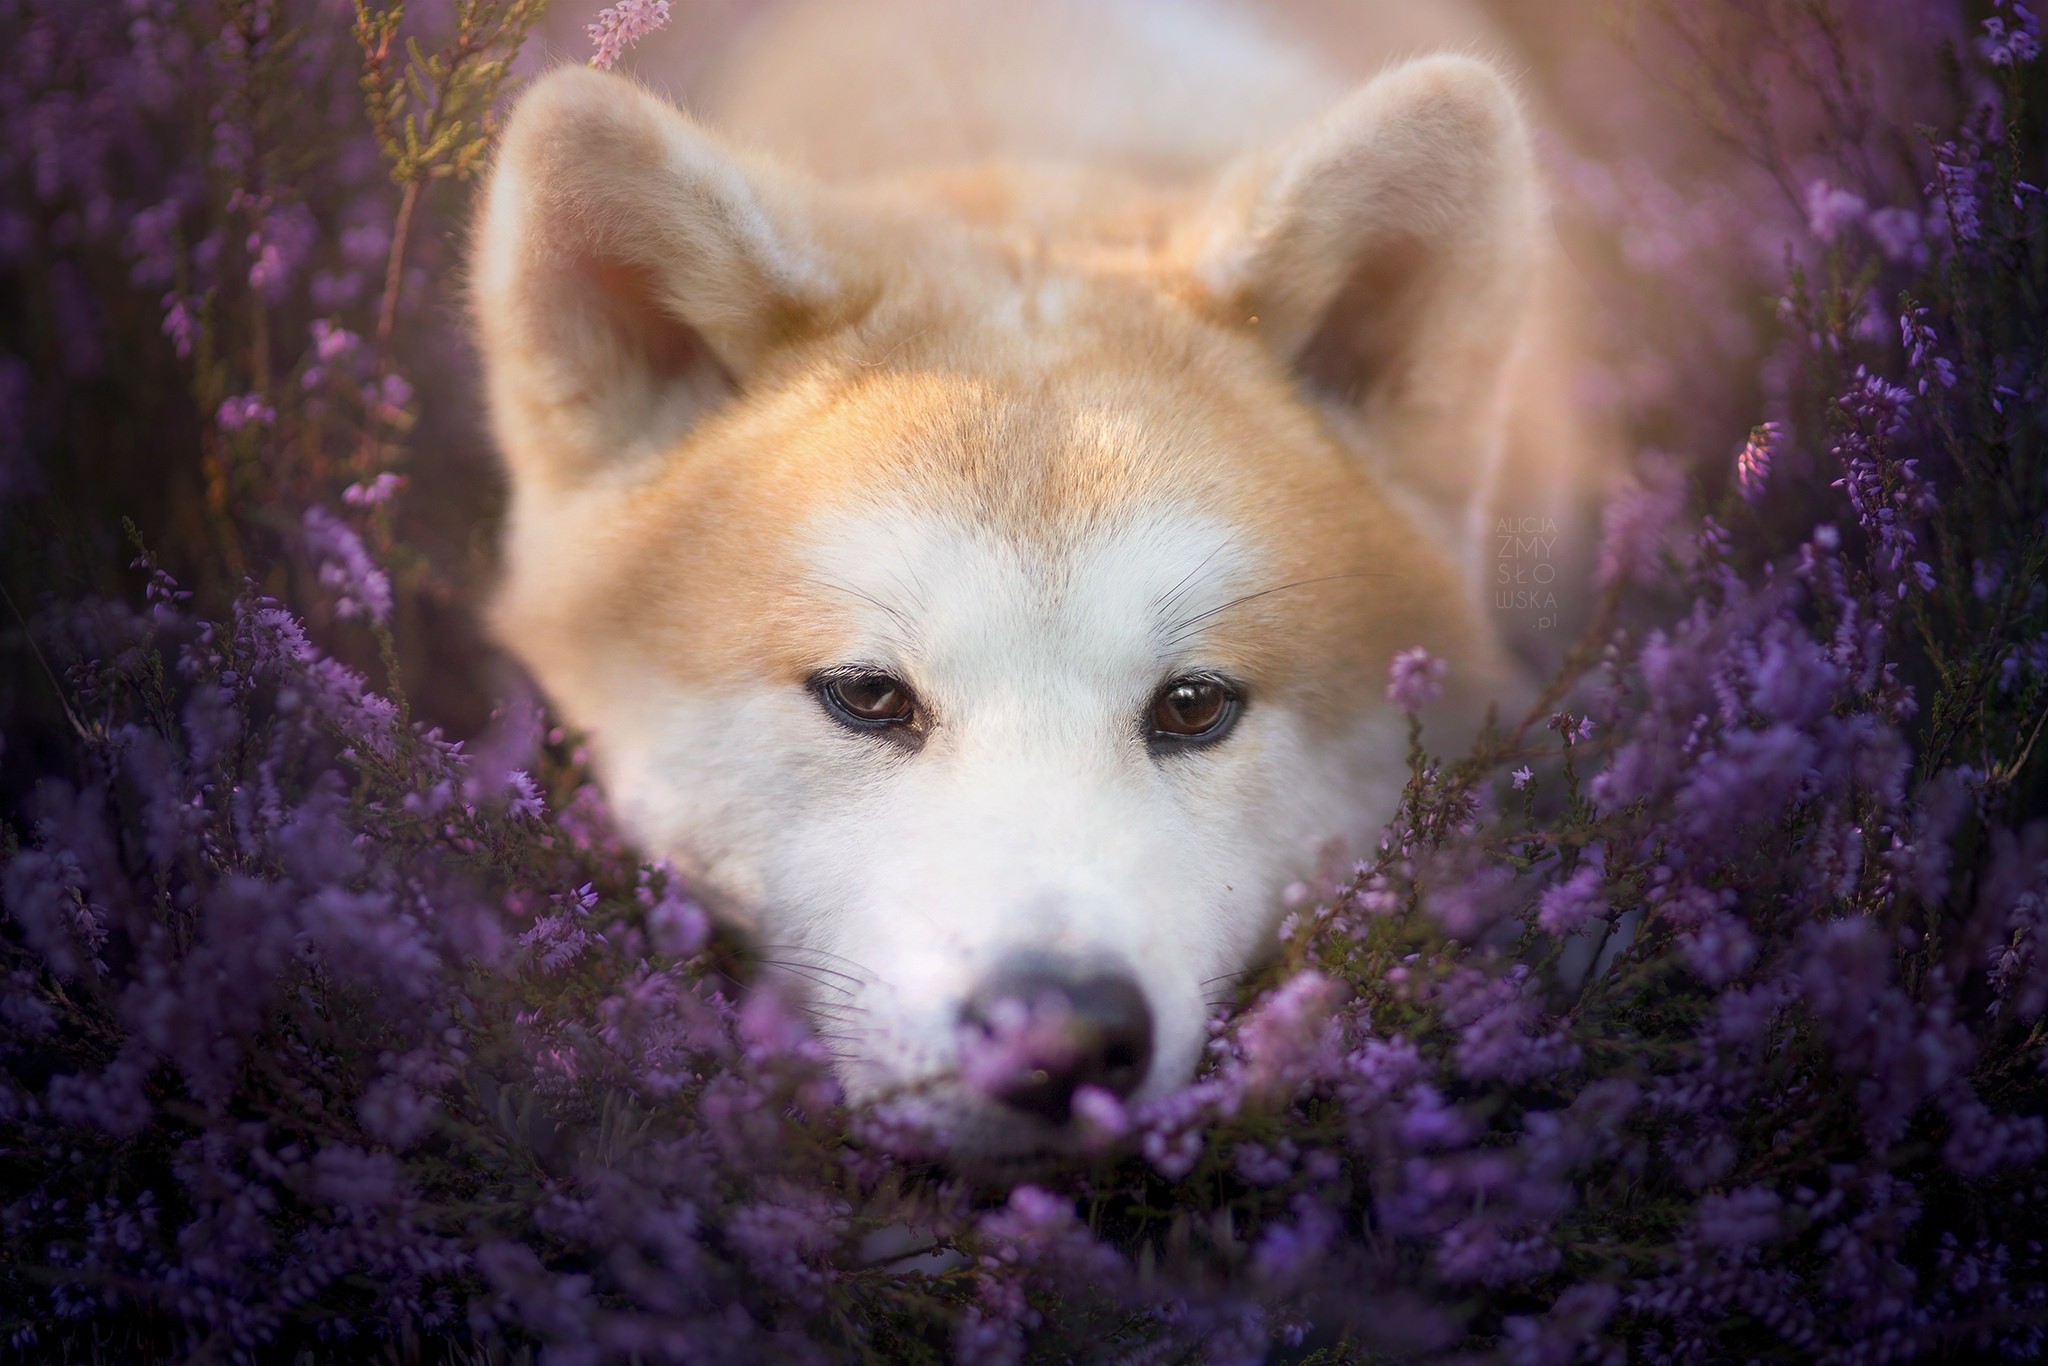 General 2048x1366 plants flowers dog animals purple flowers closeup looking at viewer fur